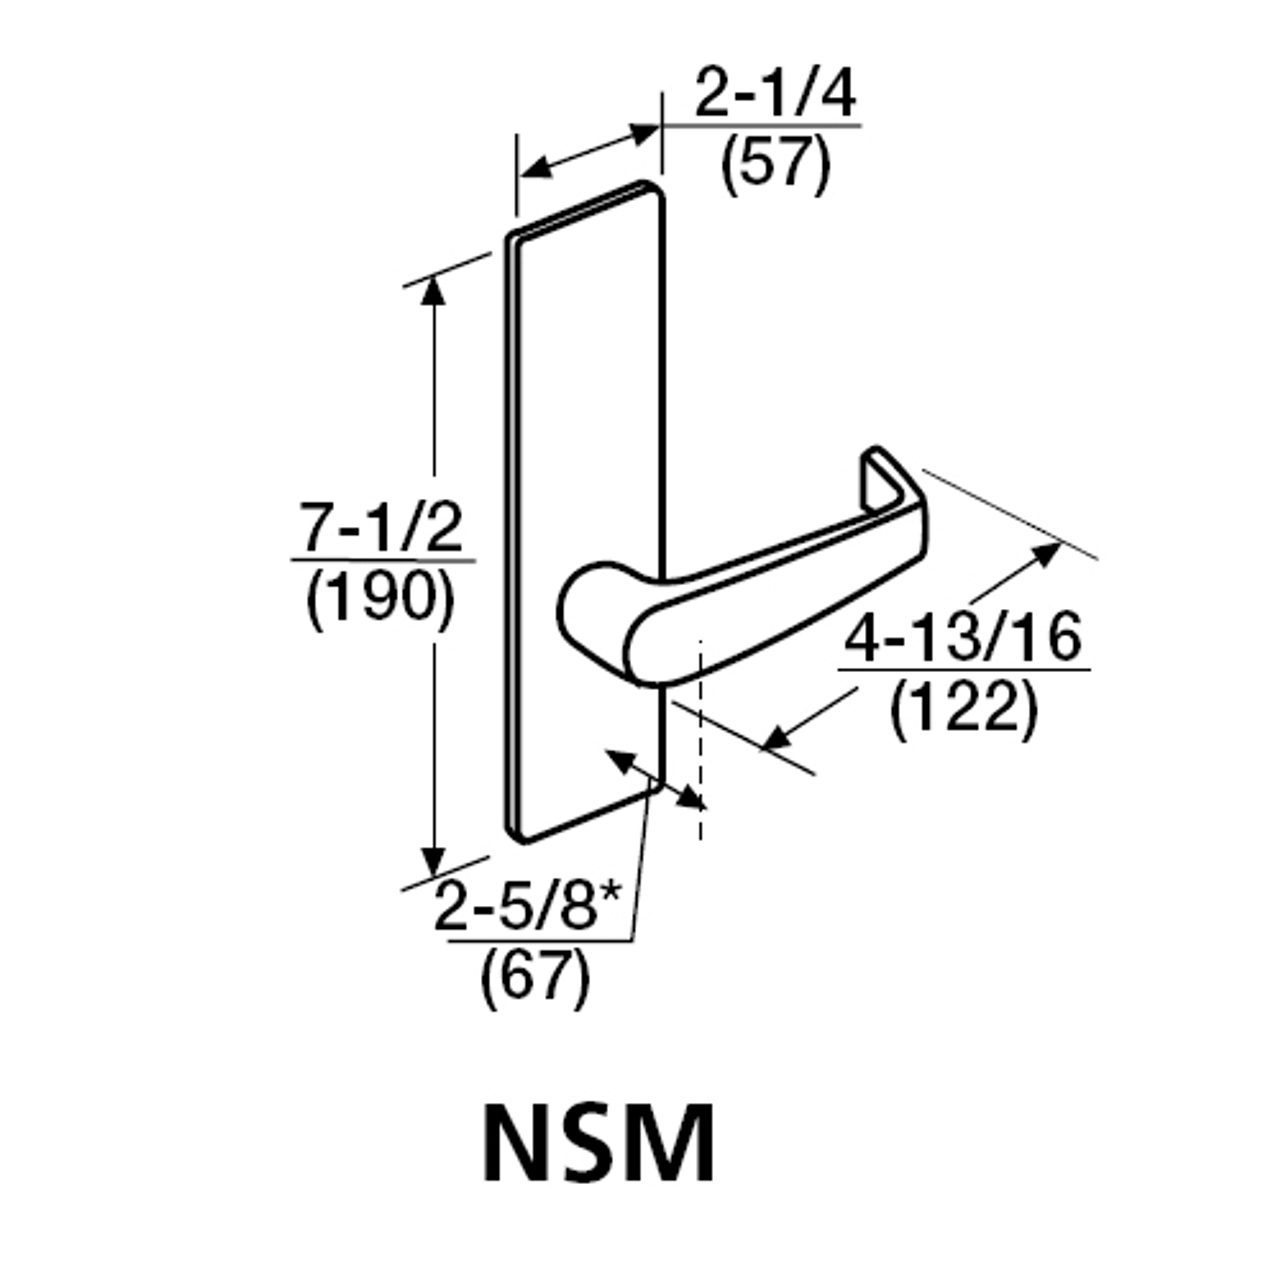 ML2052-NSM-612-CL6 Corbin Russwin ML2000 Series IC 6-Pin Less Core Mortise Classroom Intruder Locksets with Newport Lever in Satin Bronze